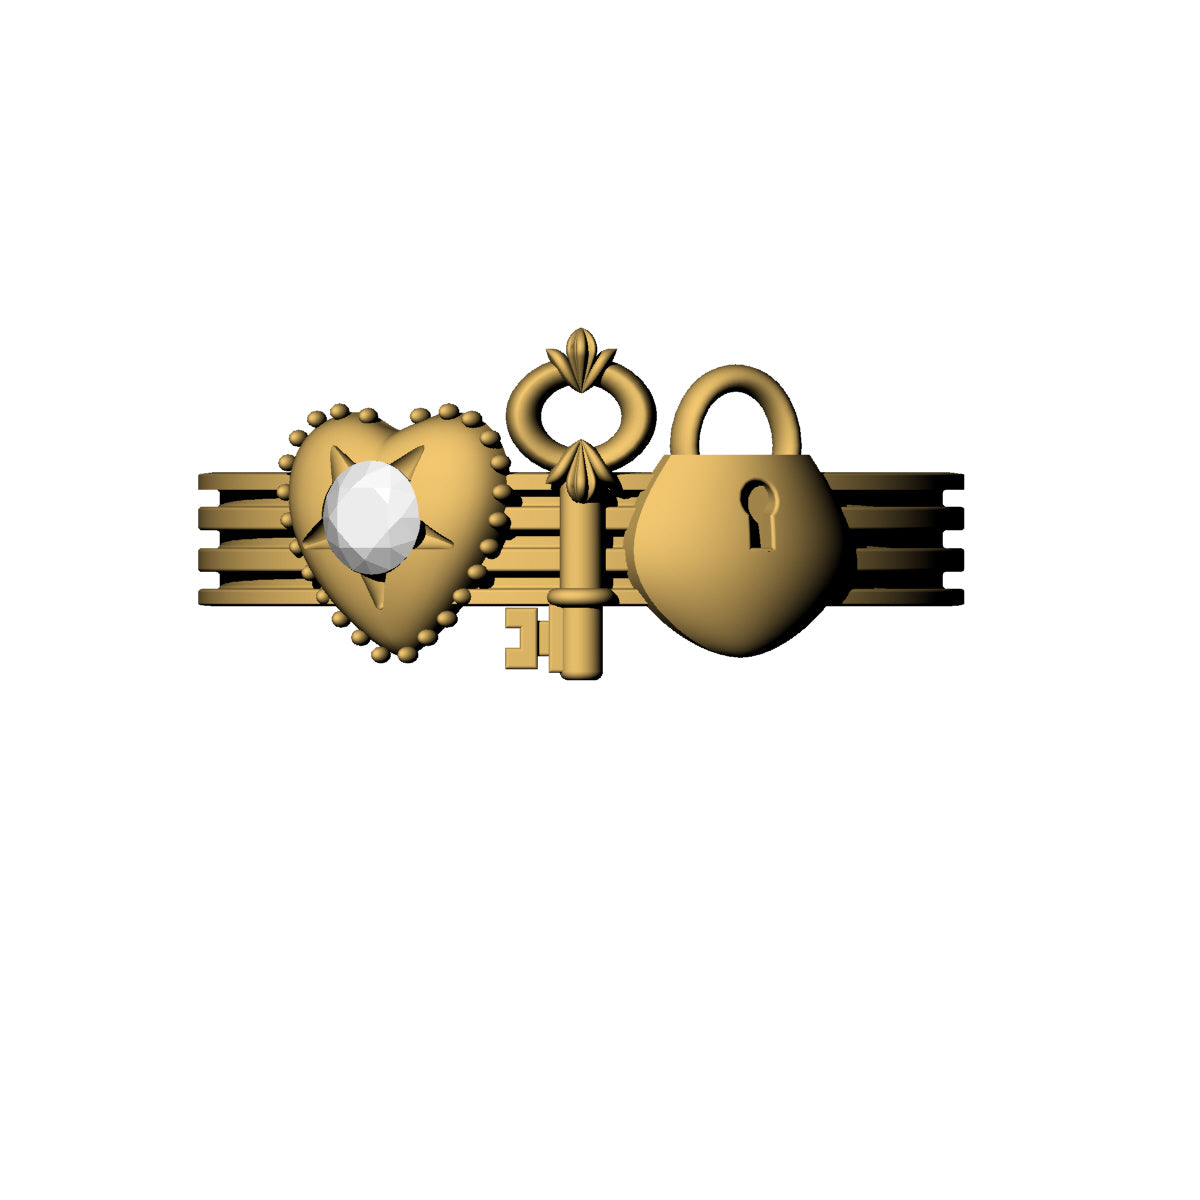 Sterling Silver & 14K Rose Gold Diamond Heart Lock & Key Pendant